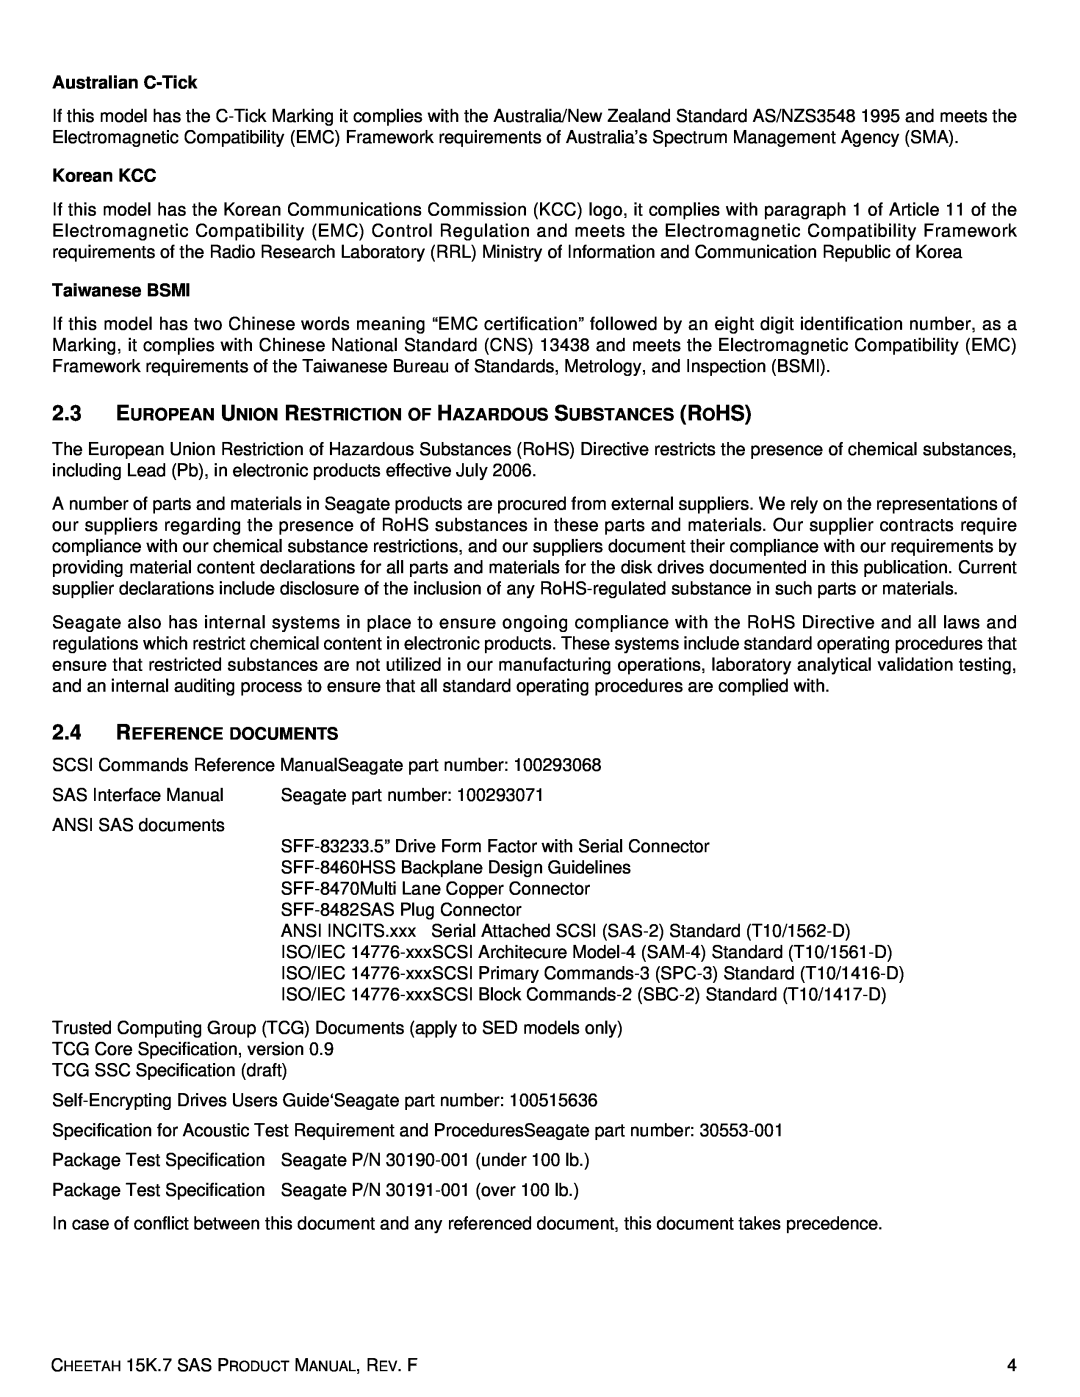 Seagate ST3600957SS Australian C-Tick, Korean KCC, Taiwanese BSMI, European Union Restriction Of Hazardous Substances Rohs 